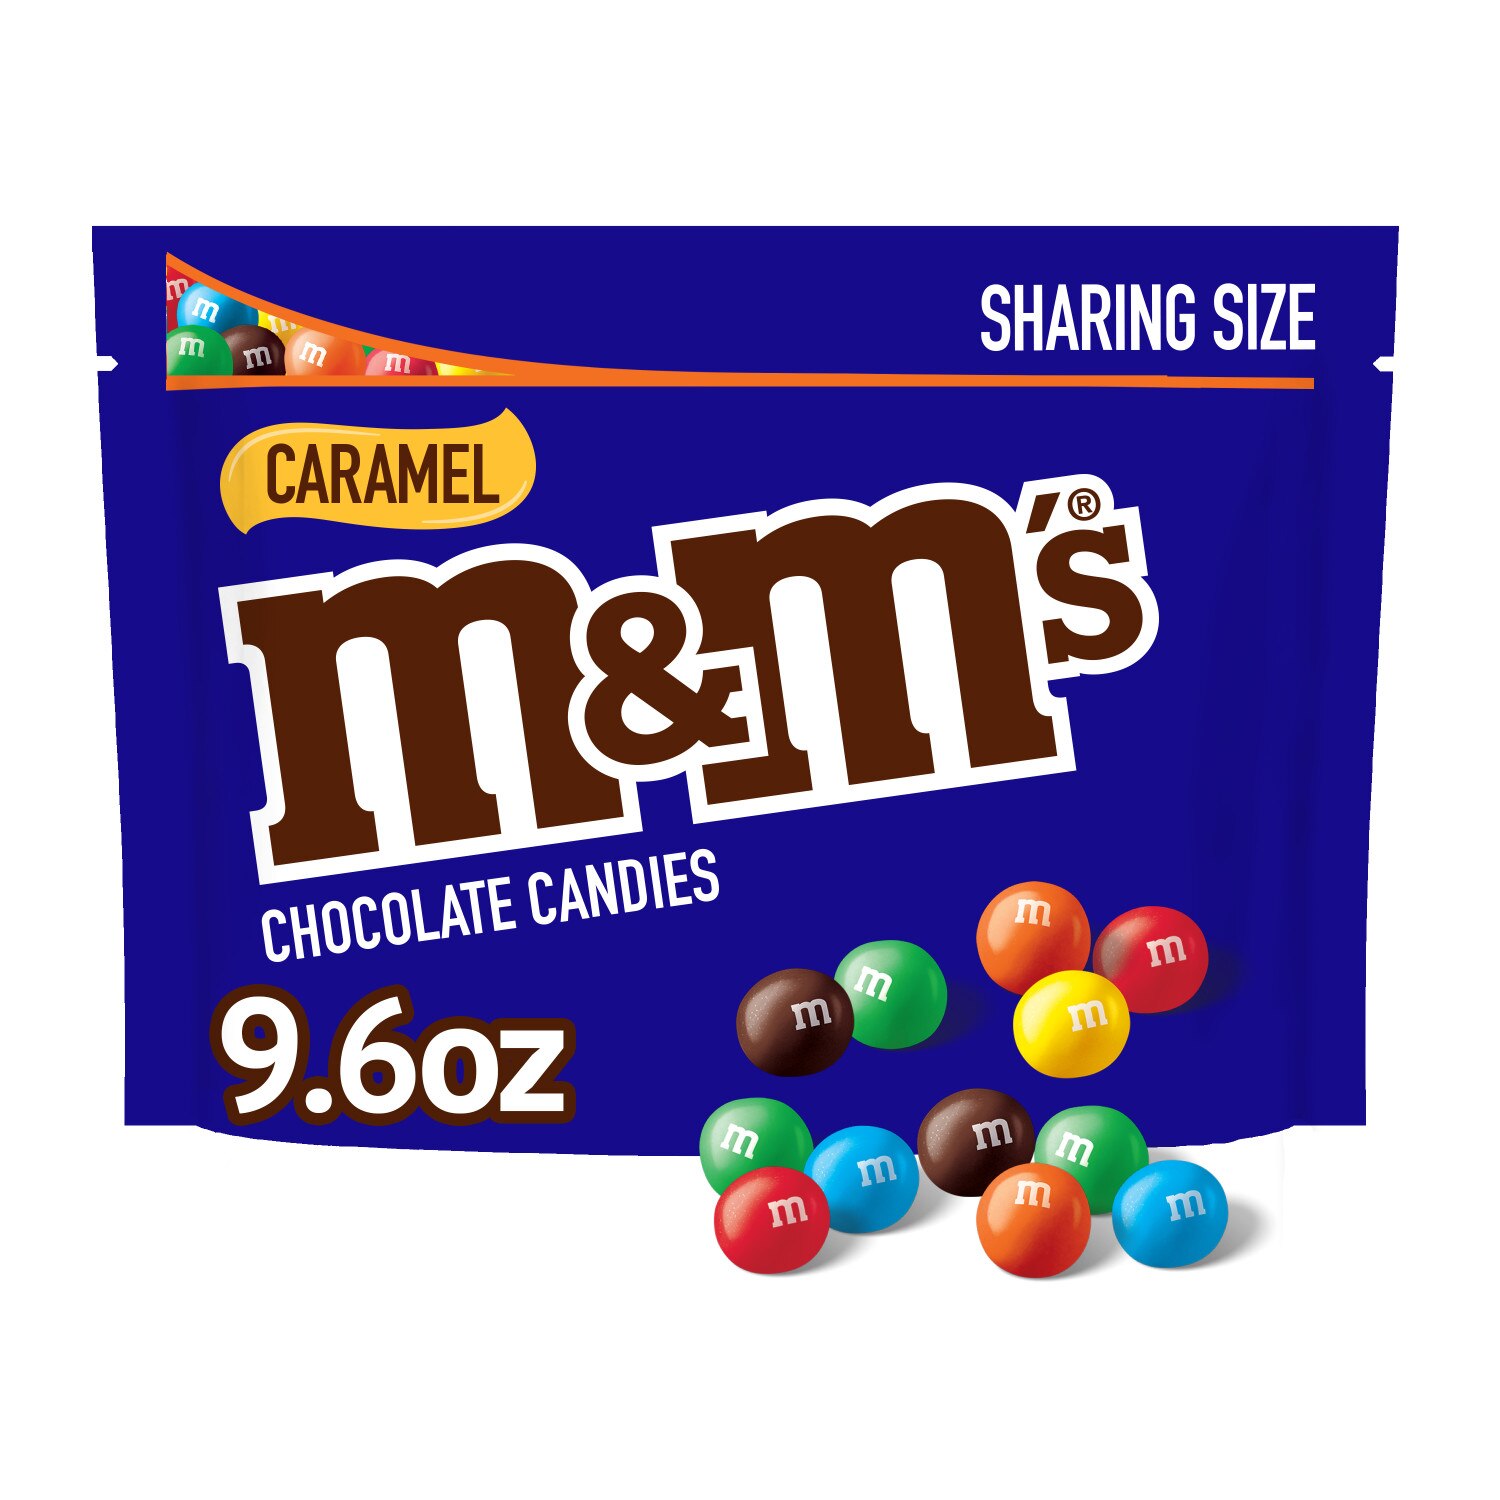 Mandms Caramel Milk Chocolate Candy Sharing Size 9 6 Oz Bag Pick Up